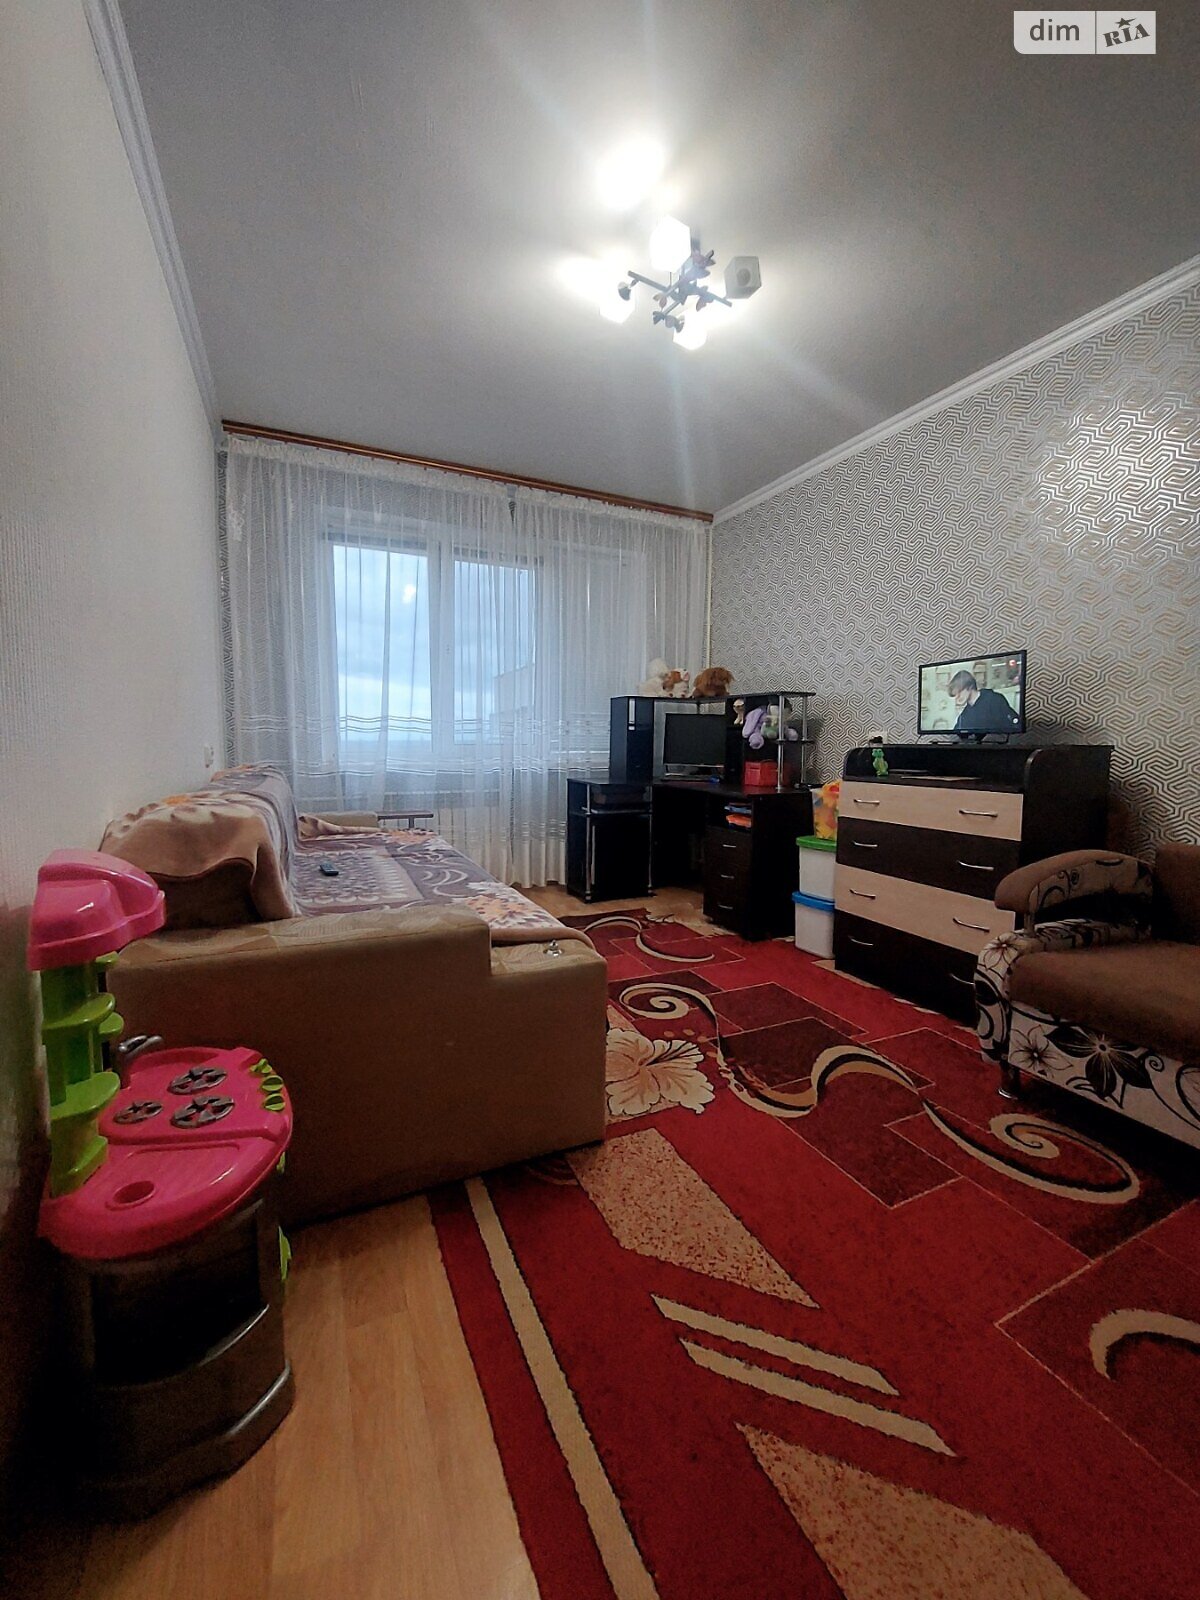 Продажа однокомнатной квартиры в Черкассах, на ул. Сагайдачного Гетьмана 170, район Район Д фото 1